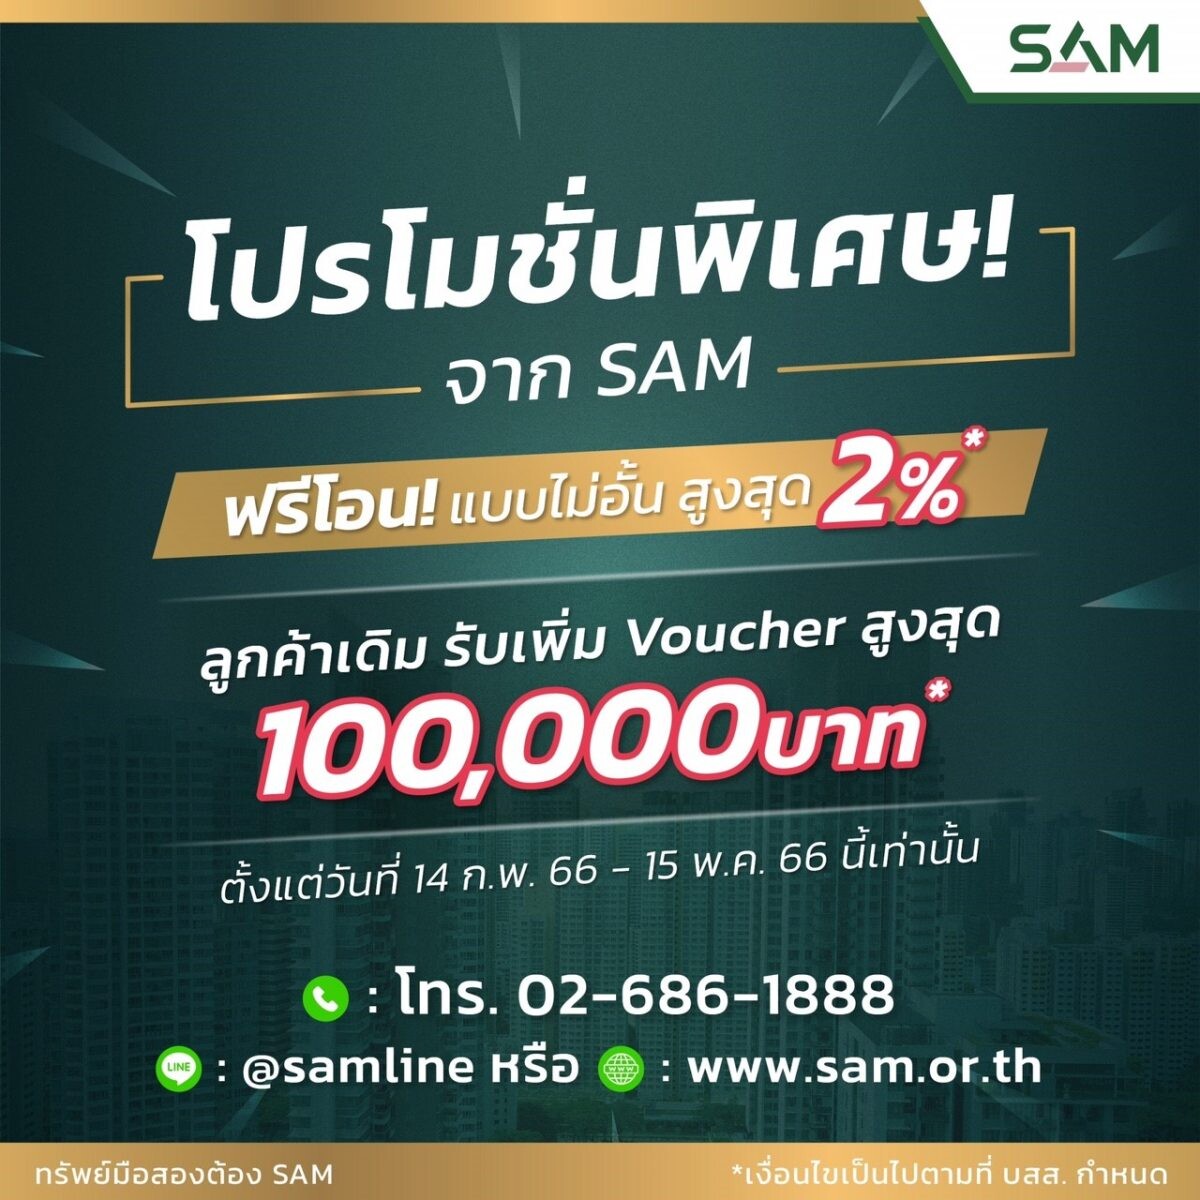 SAM บริษัทบริหารสินทรัพย์ของคนไทย เข็นโปรโมชั่น "ฟรีโอน" สูงสุด 2% กระตุ้นตลาด NPA หมดเขต 15 พ.ค. นี้